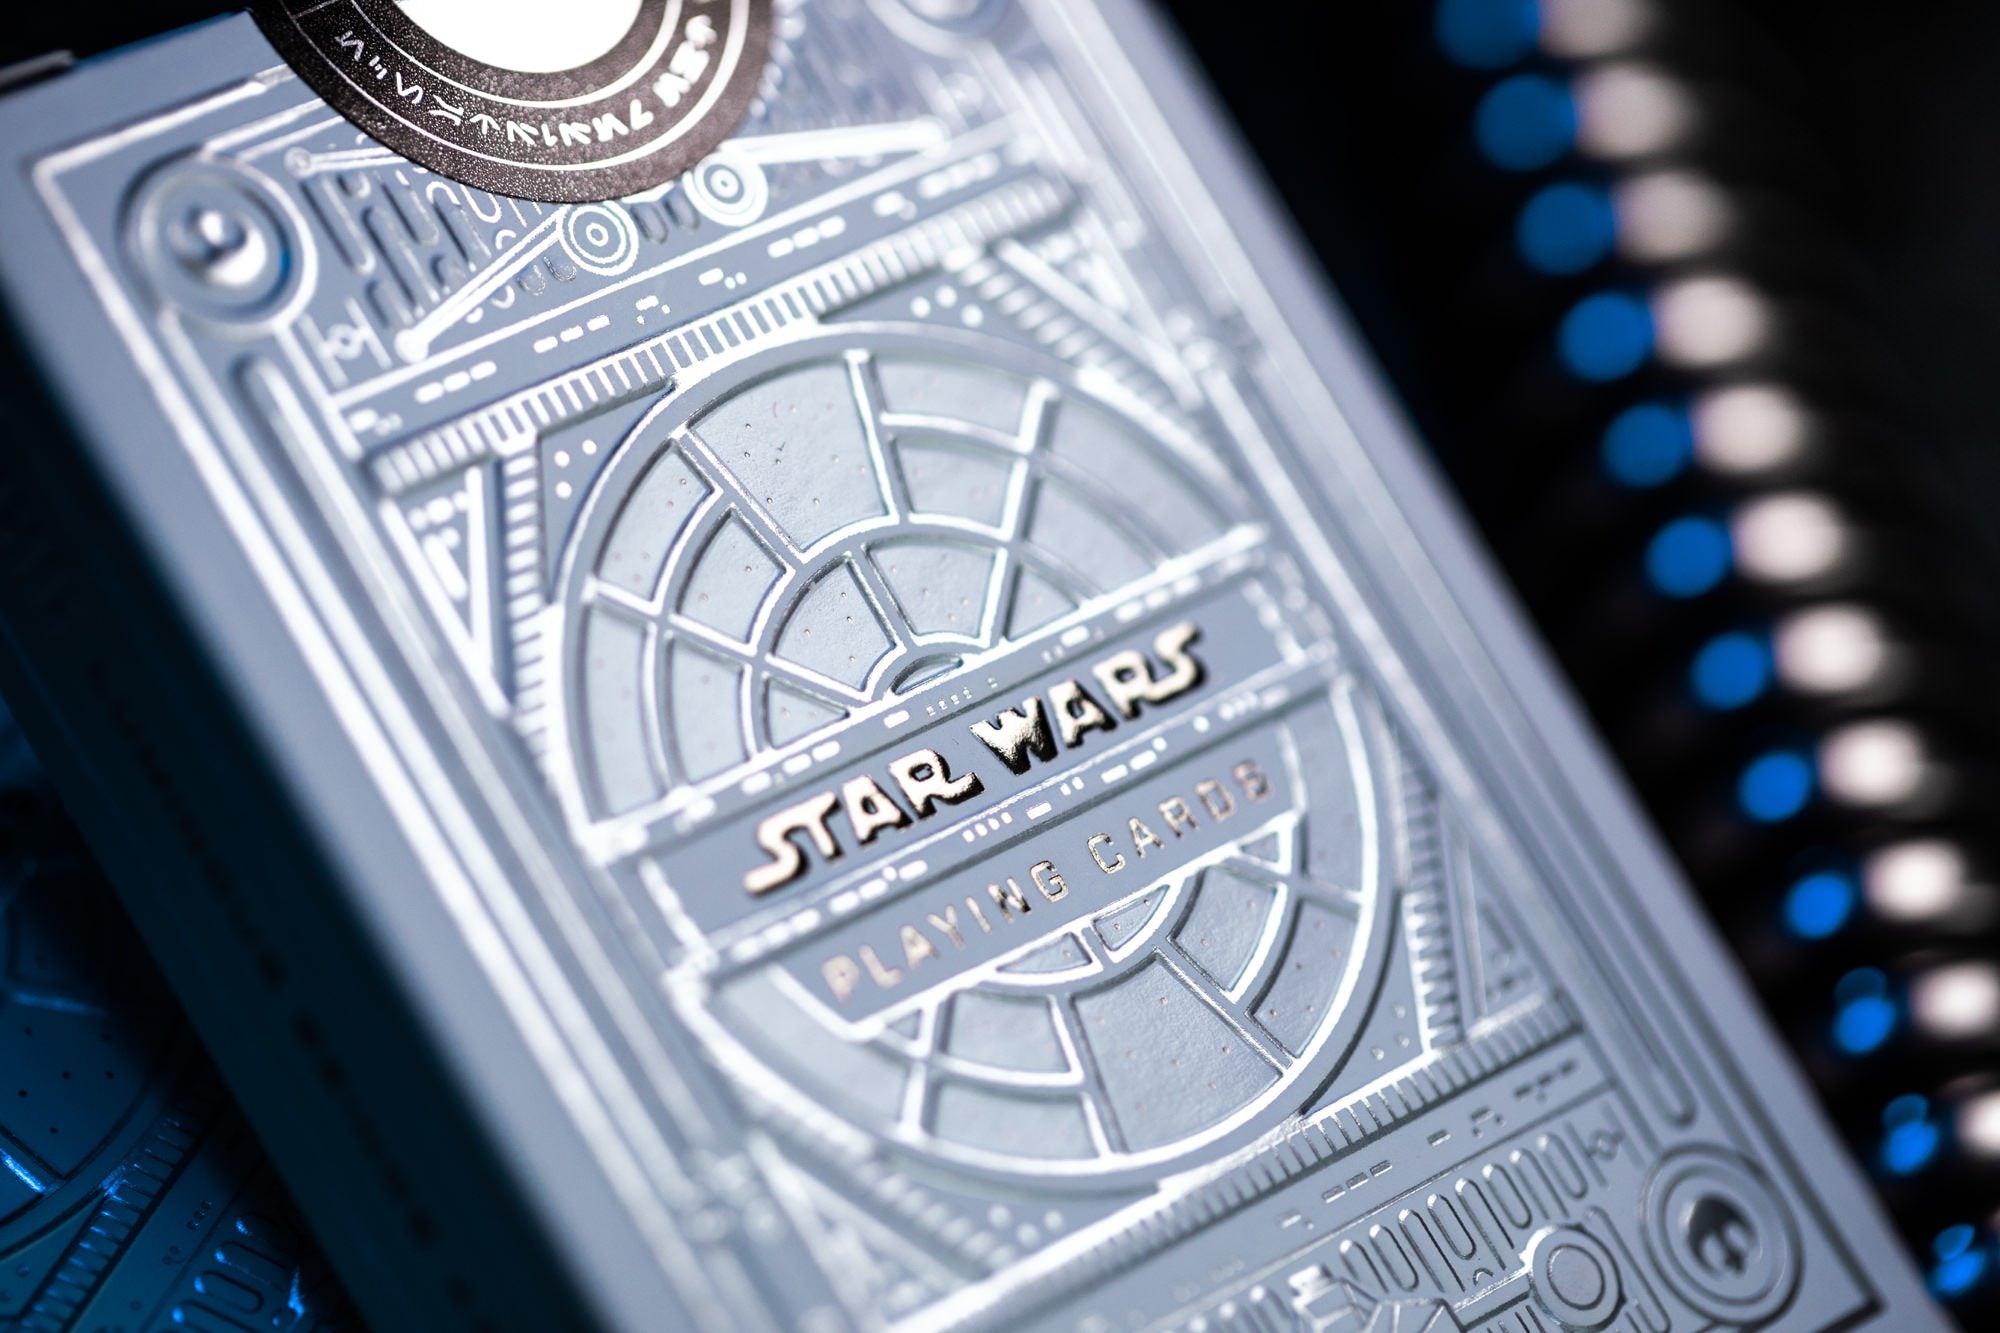 Star Wars Silver Edition